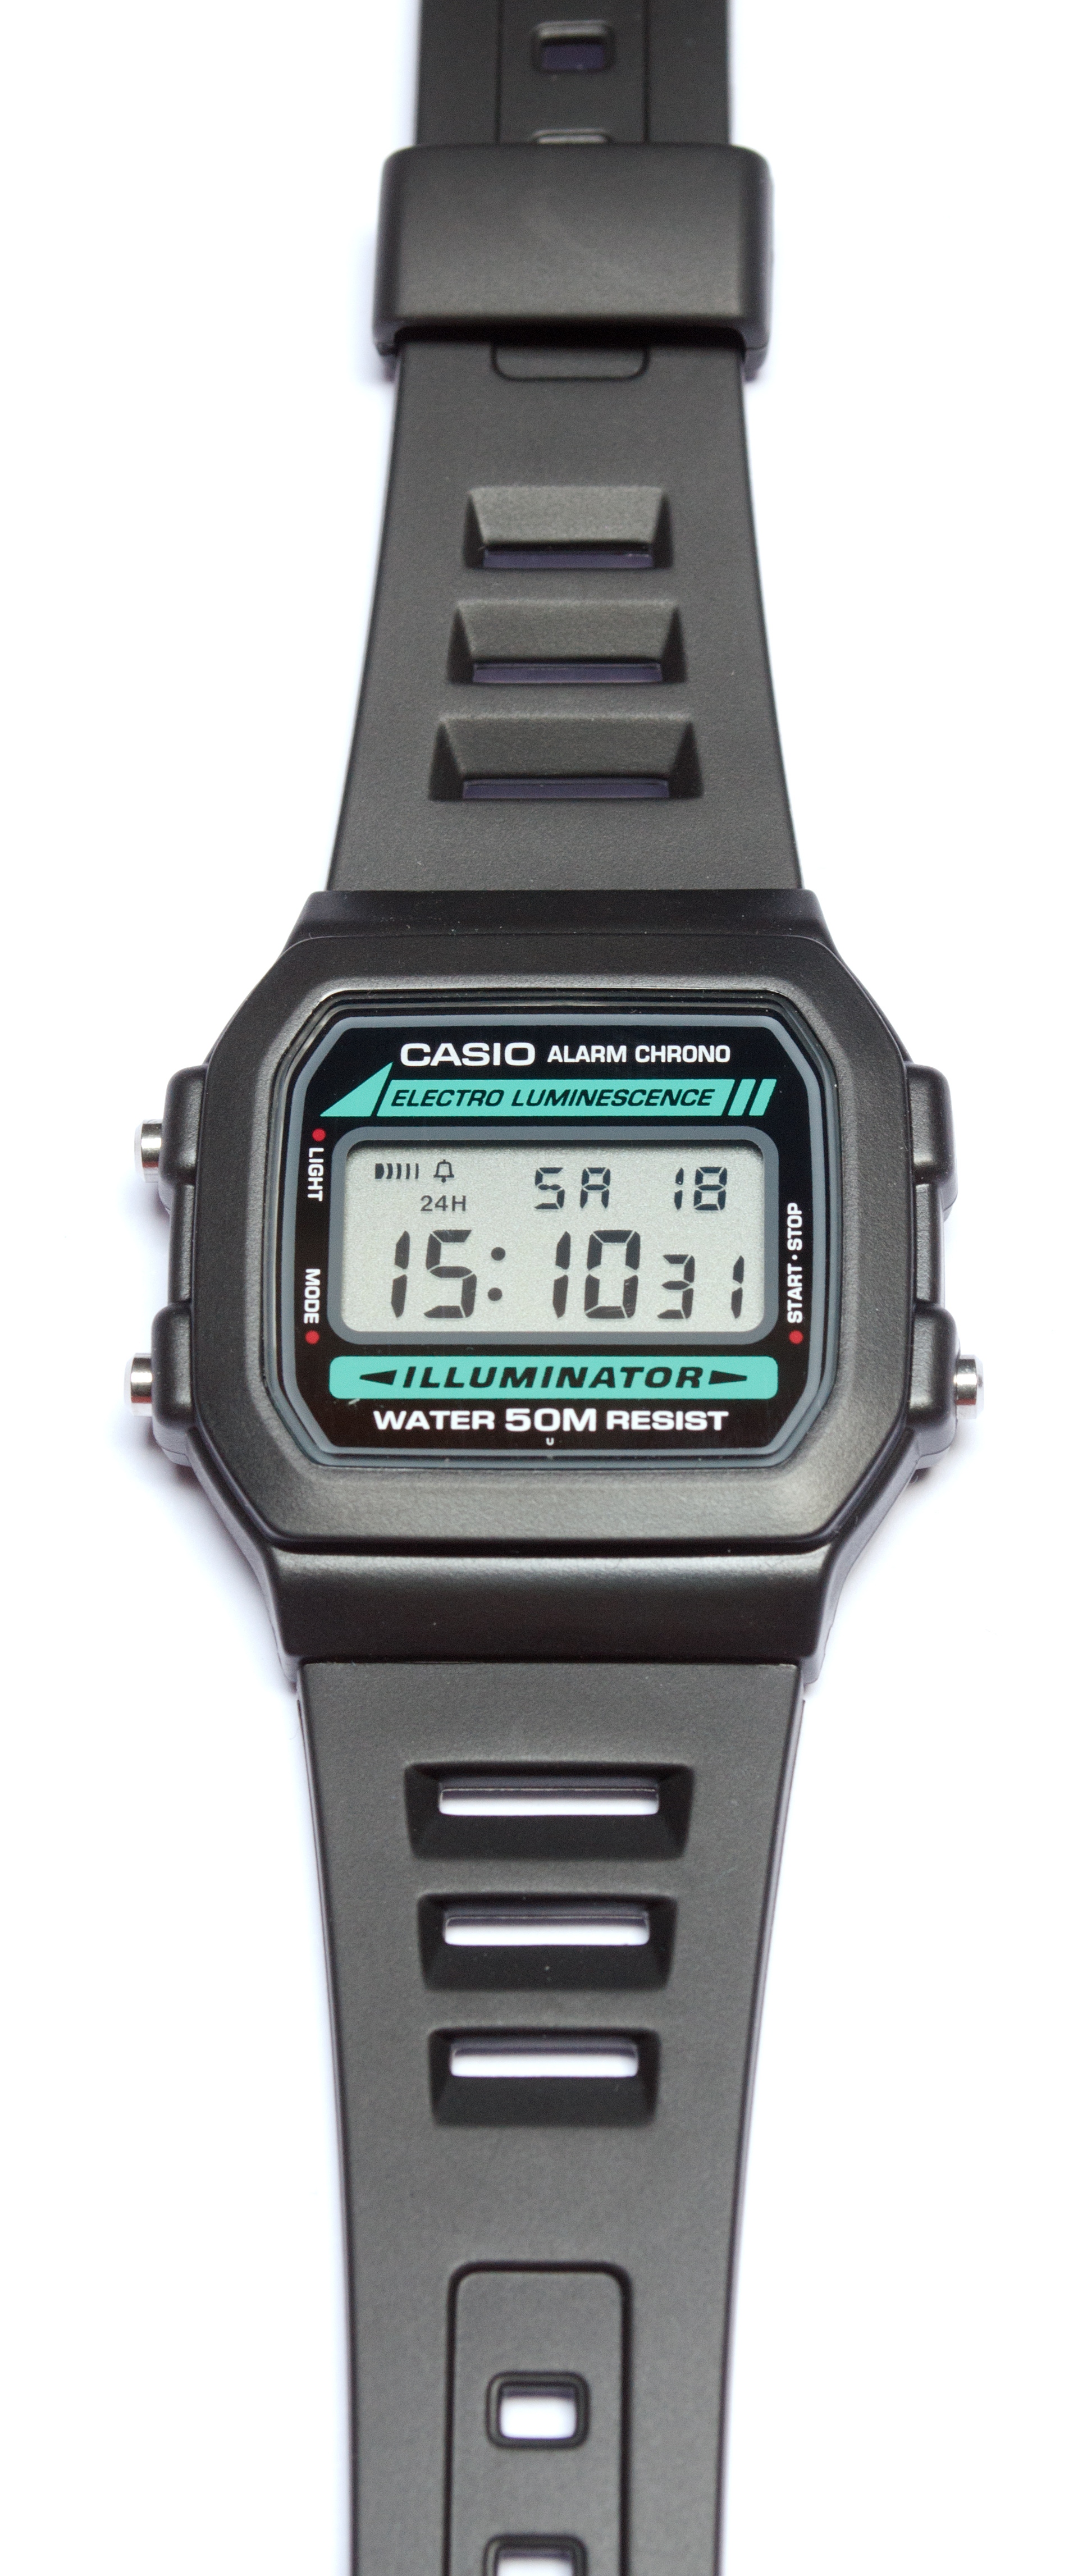 File:Casio W-86 digital watch electroluminescent backlight (ii).jpg -  Wikipedia